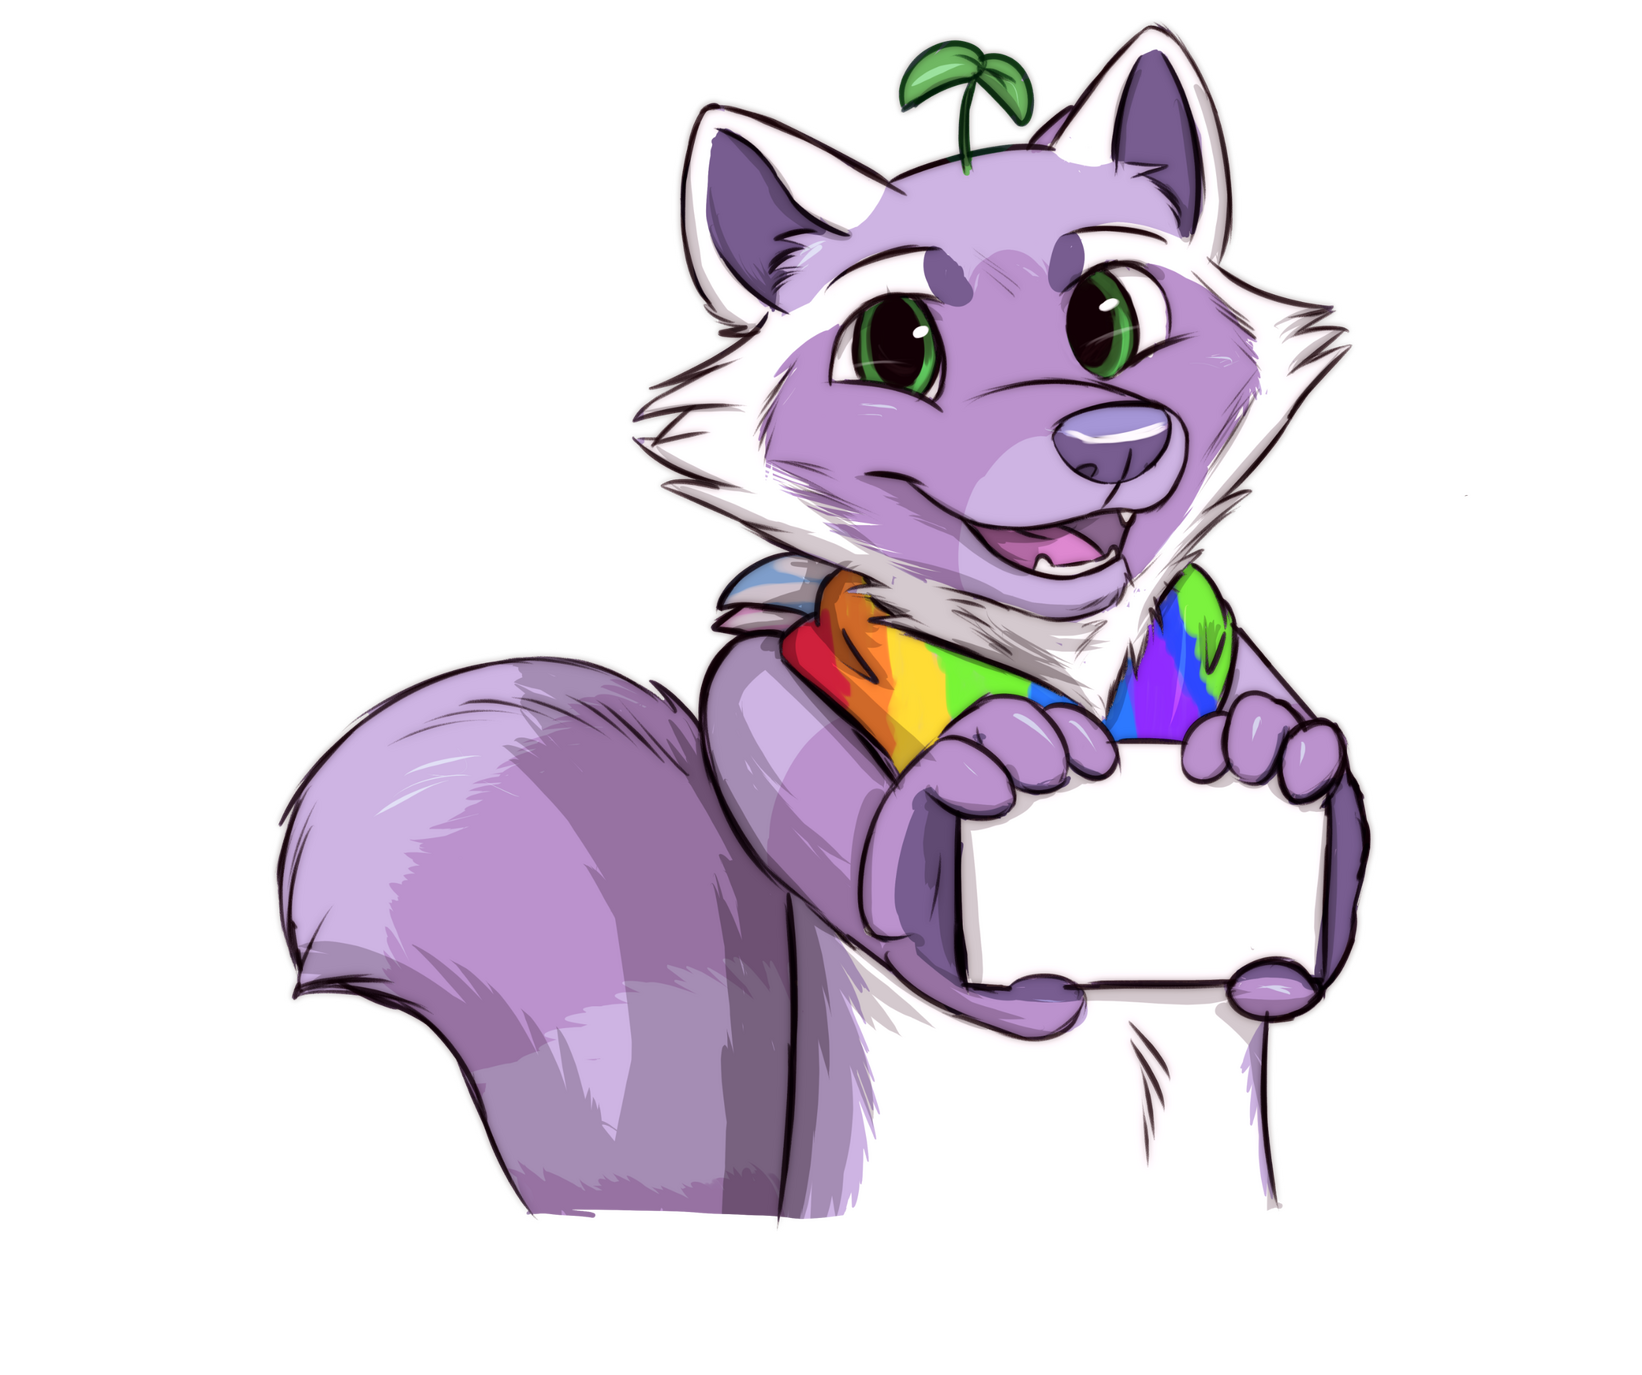 Joy the purple raccoon holding up a badge